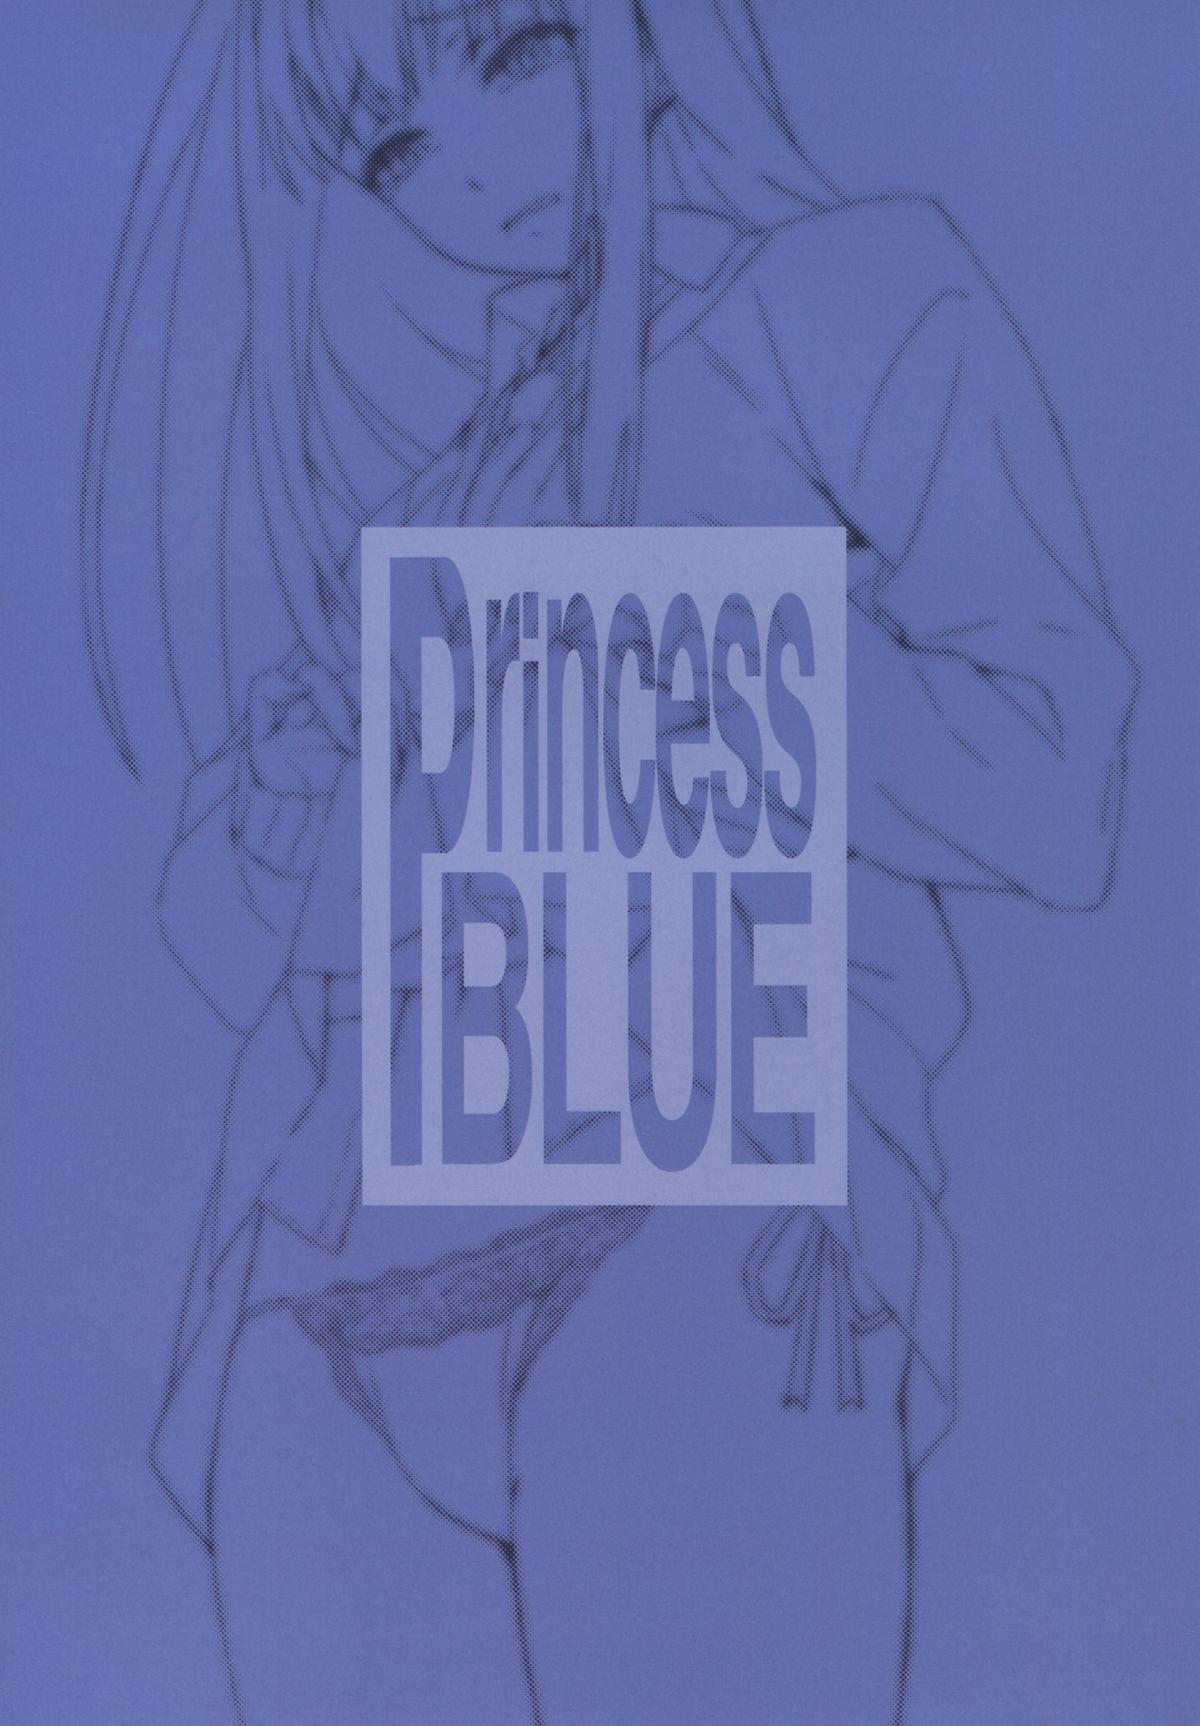 Princess blue(C88) [alicemiller (松竜)]  (アイドルマスター シンデレラガールズ) [中国翻訳](27页)